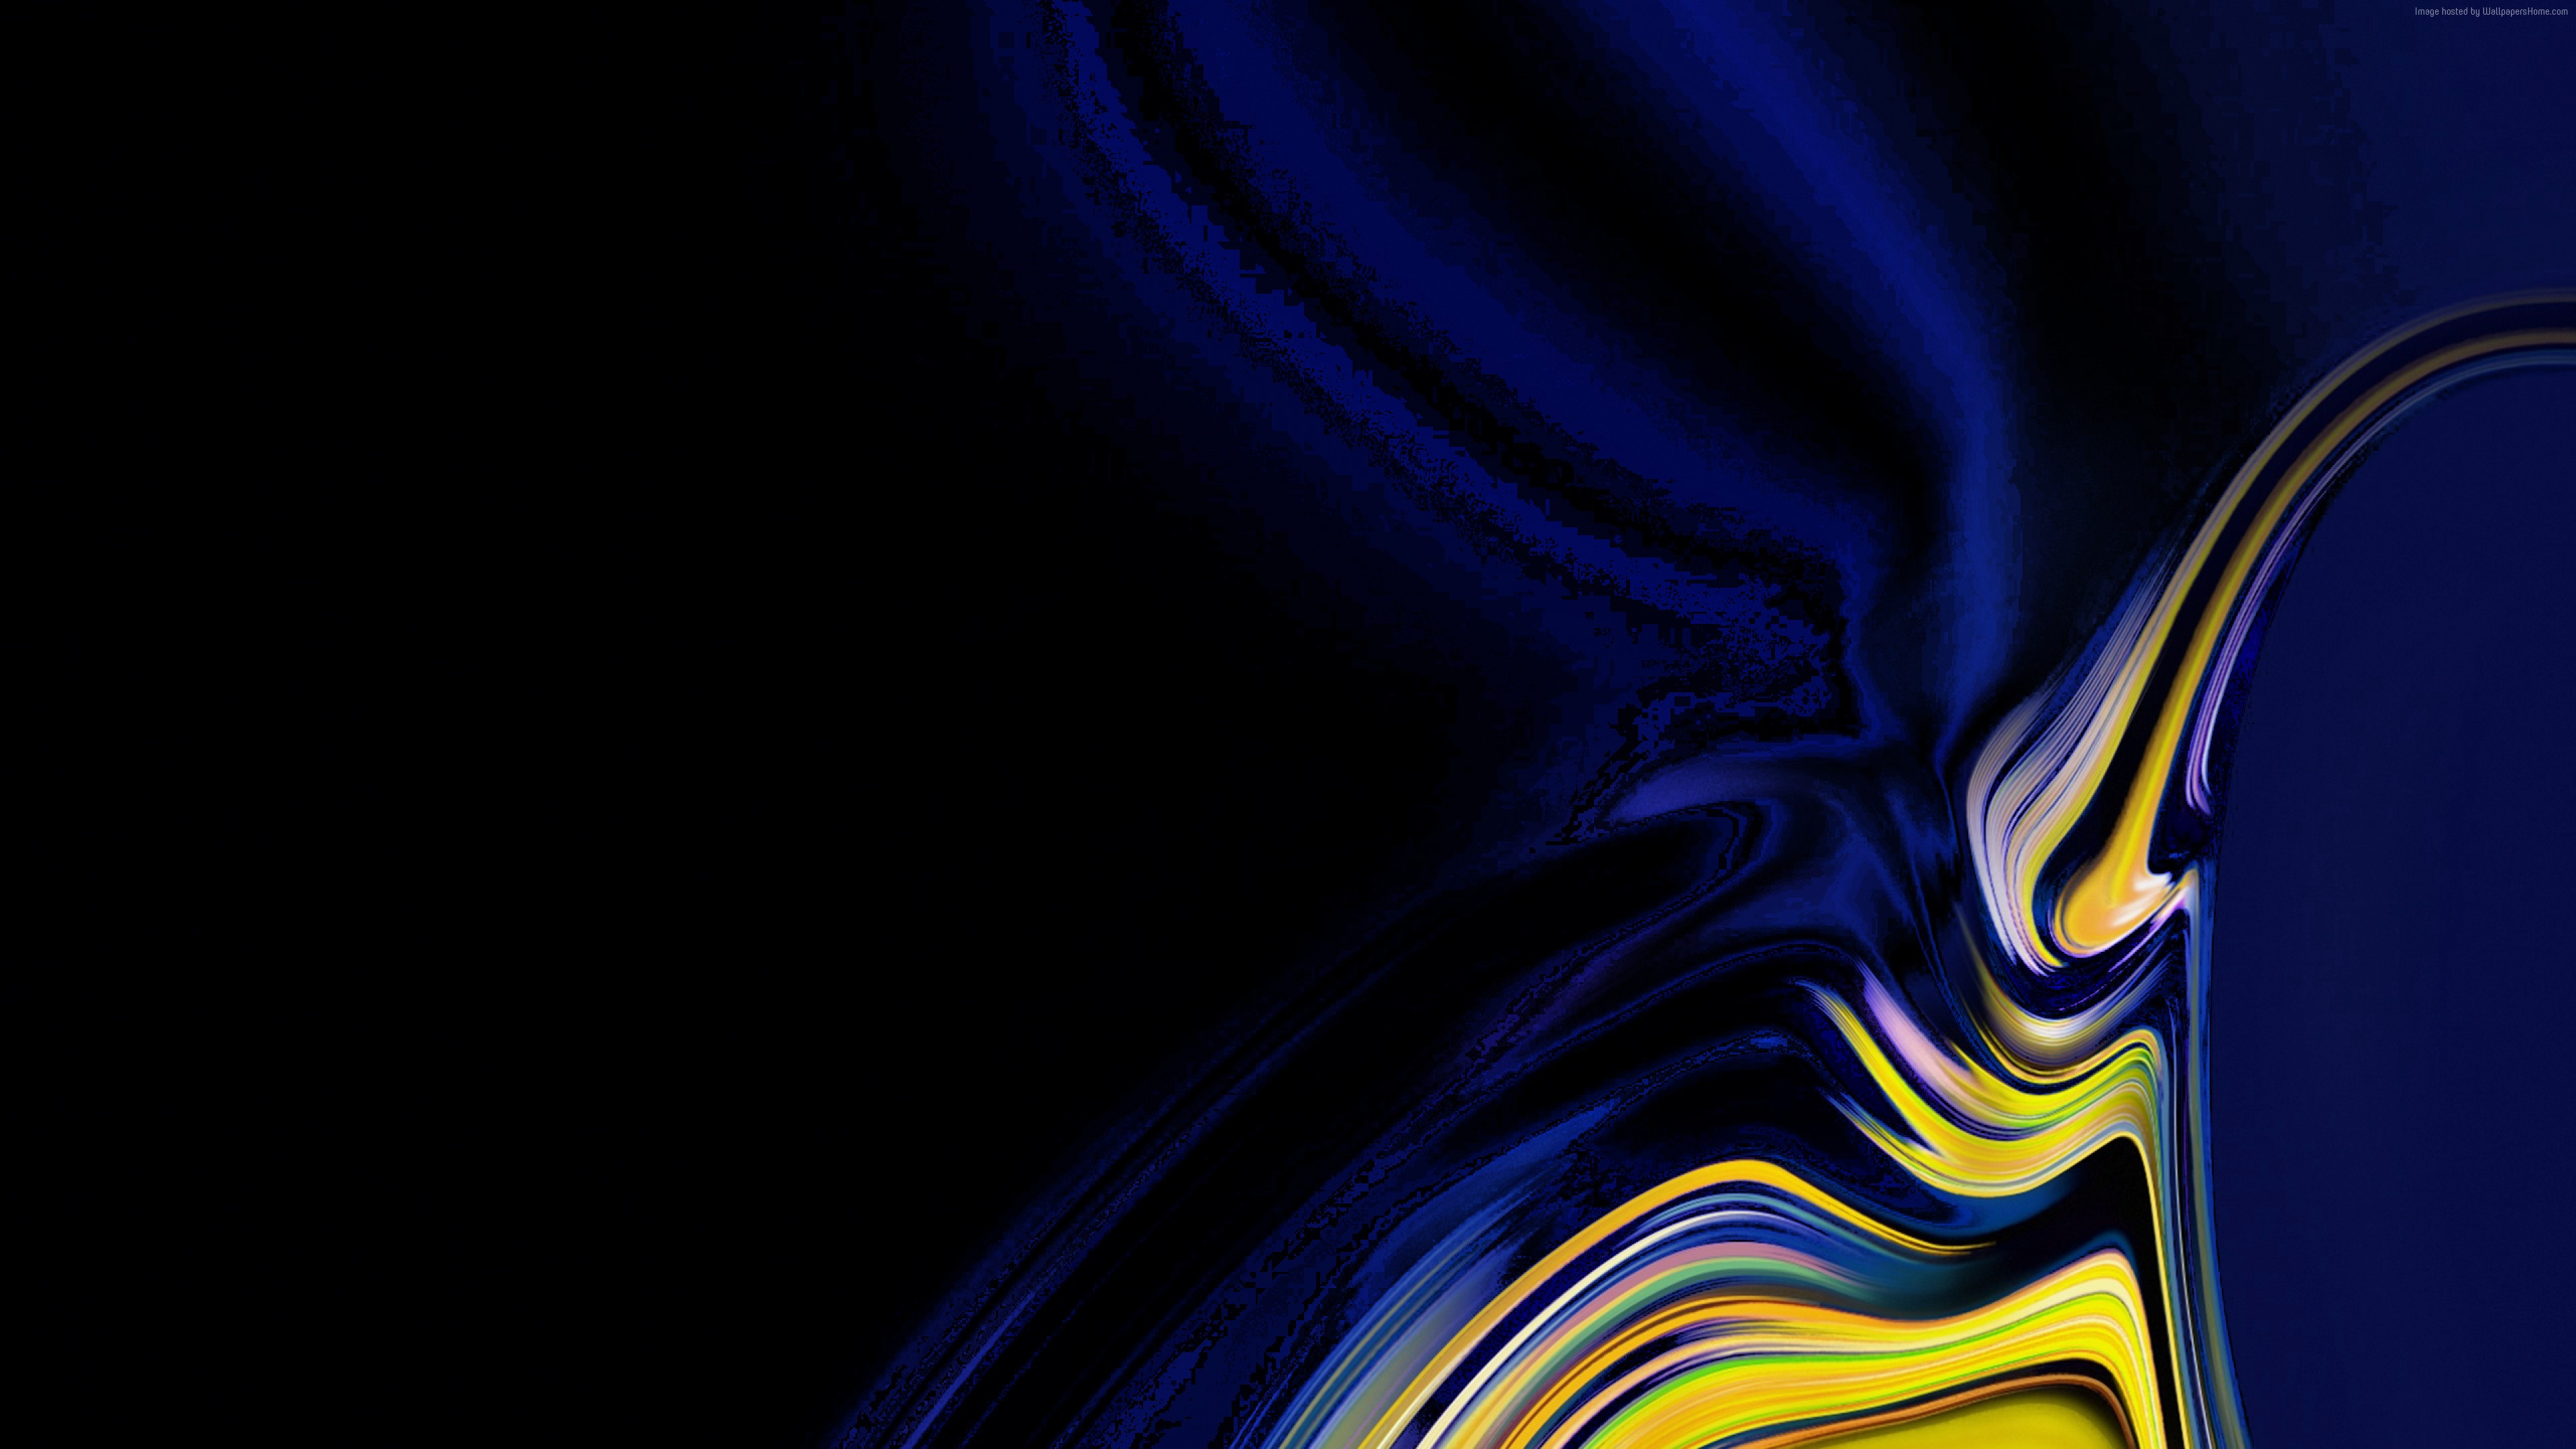 fond d'écran samsung galaxy,bleu,bleu cobalt,l'eau,bleu électrique,jaune